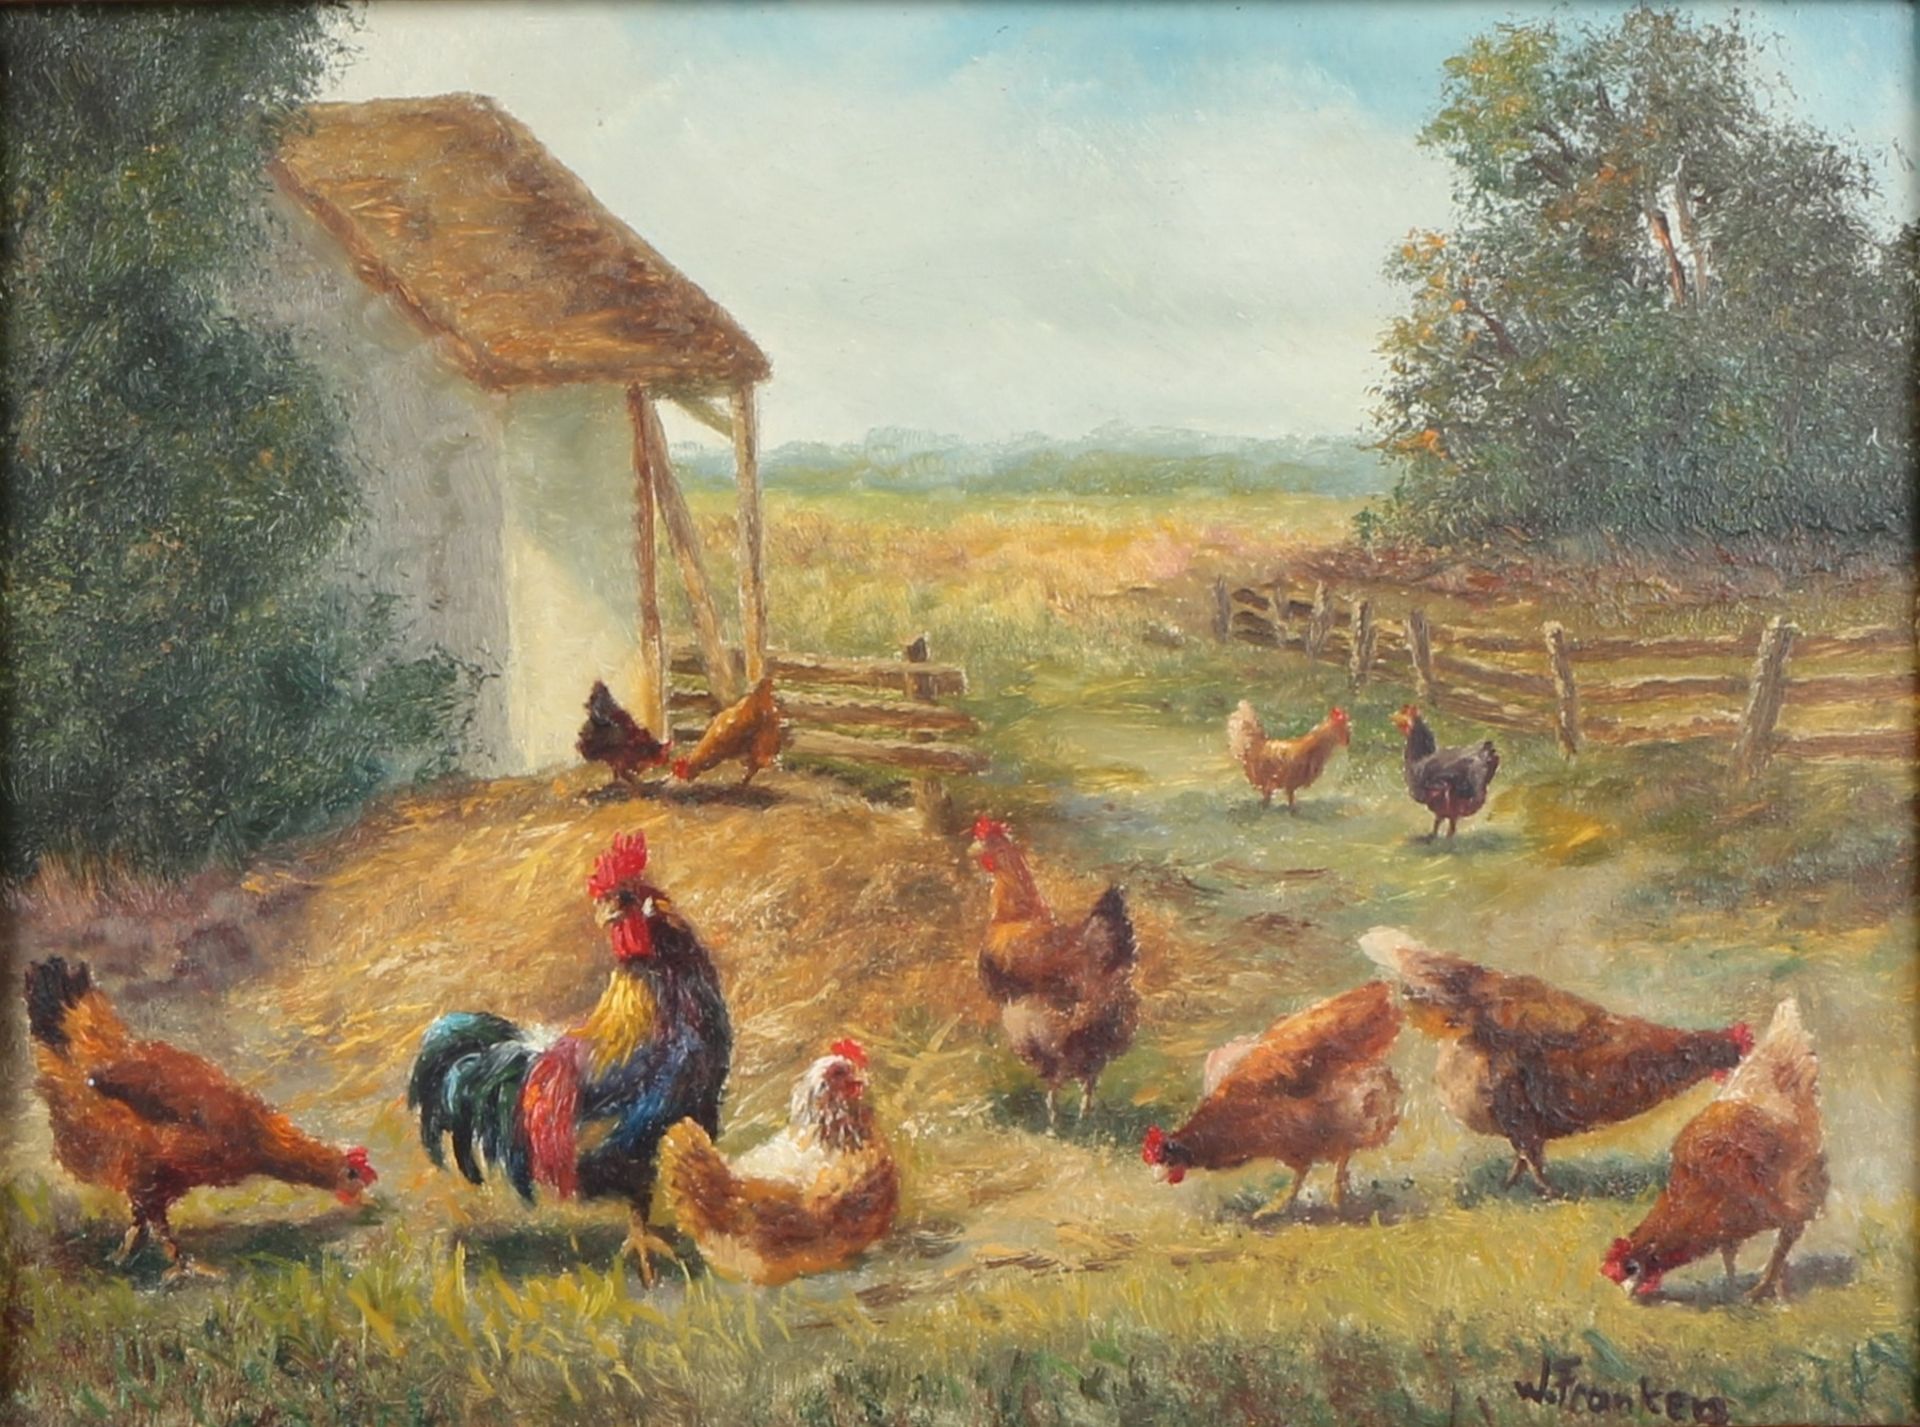 Willi Franken (1882-1960) Gockel mit Hühnerschar, cock and chickens,